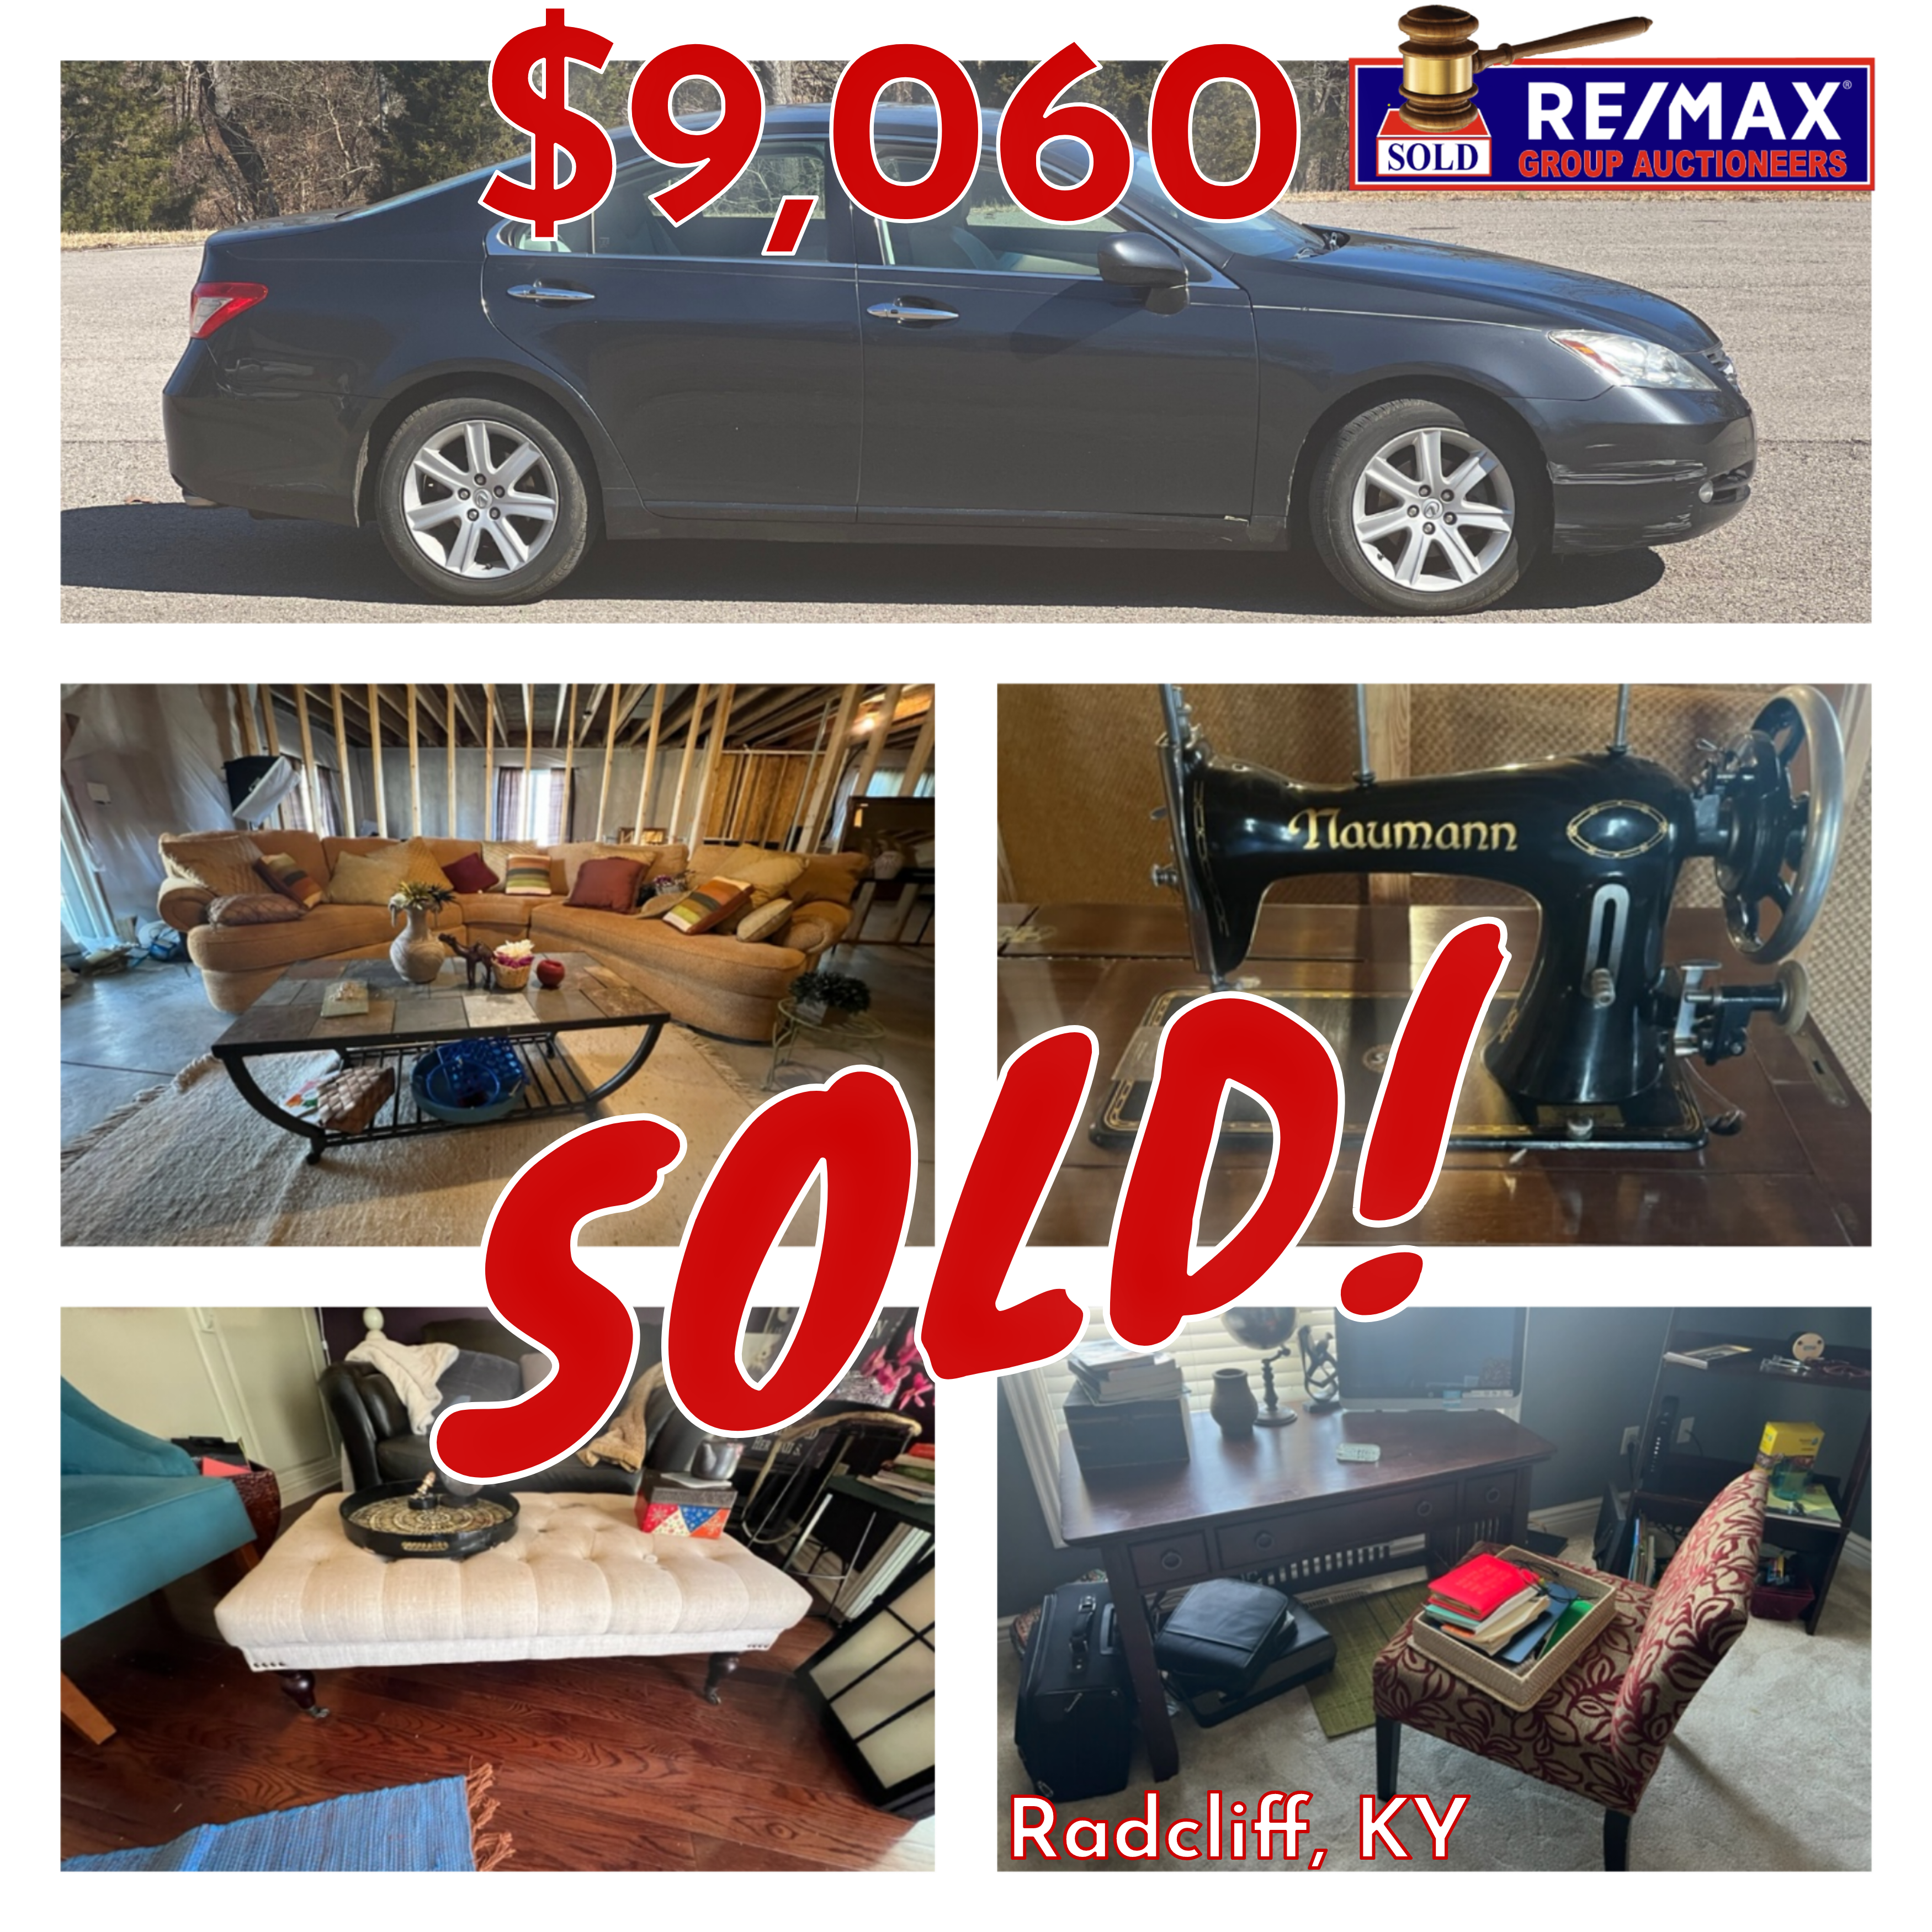 Radcliff KY Personal Property Auction | Antiques, Furniture, a Lexus Sedan, & More!